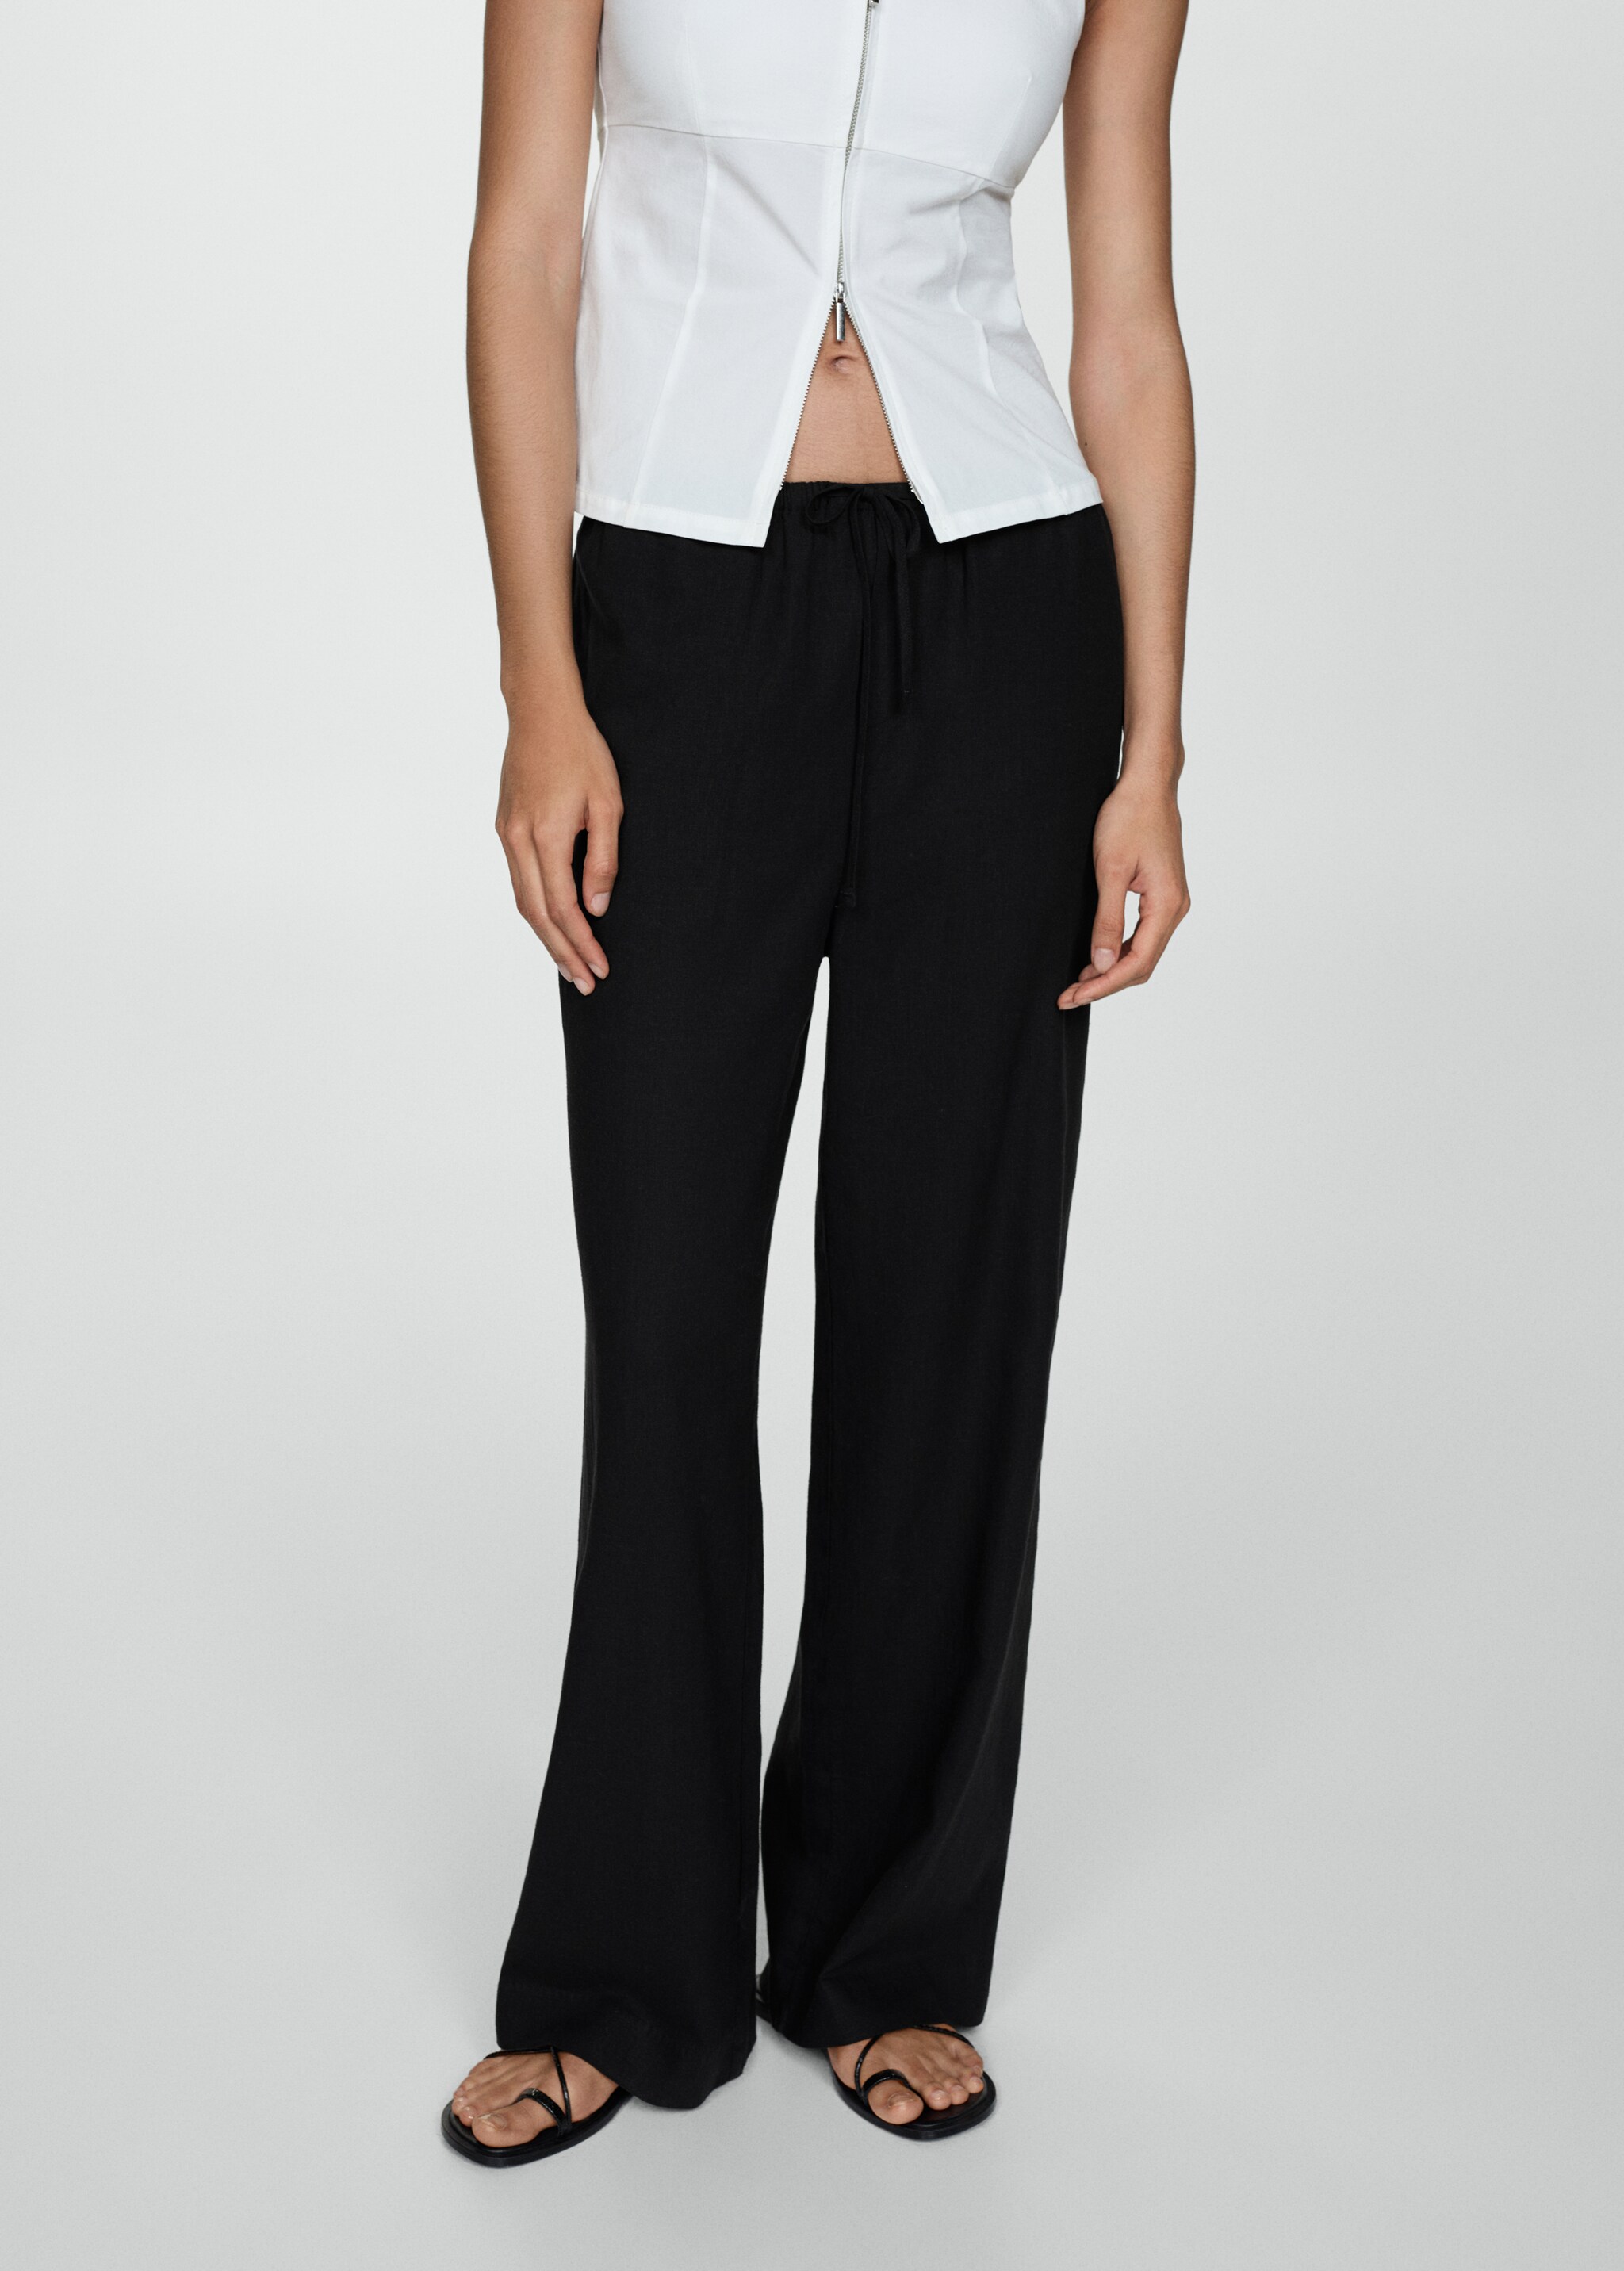 100% linen straight trousers - Medium plane